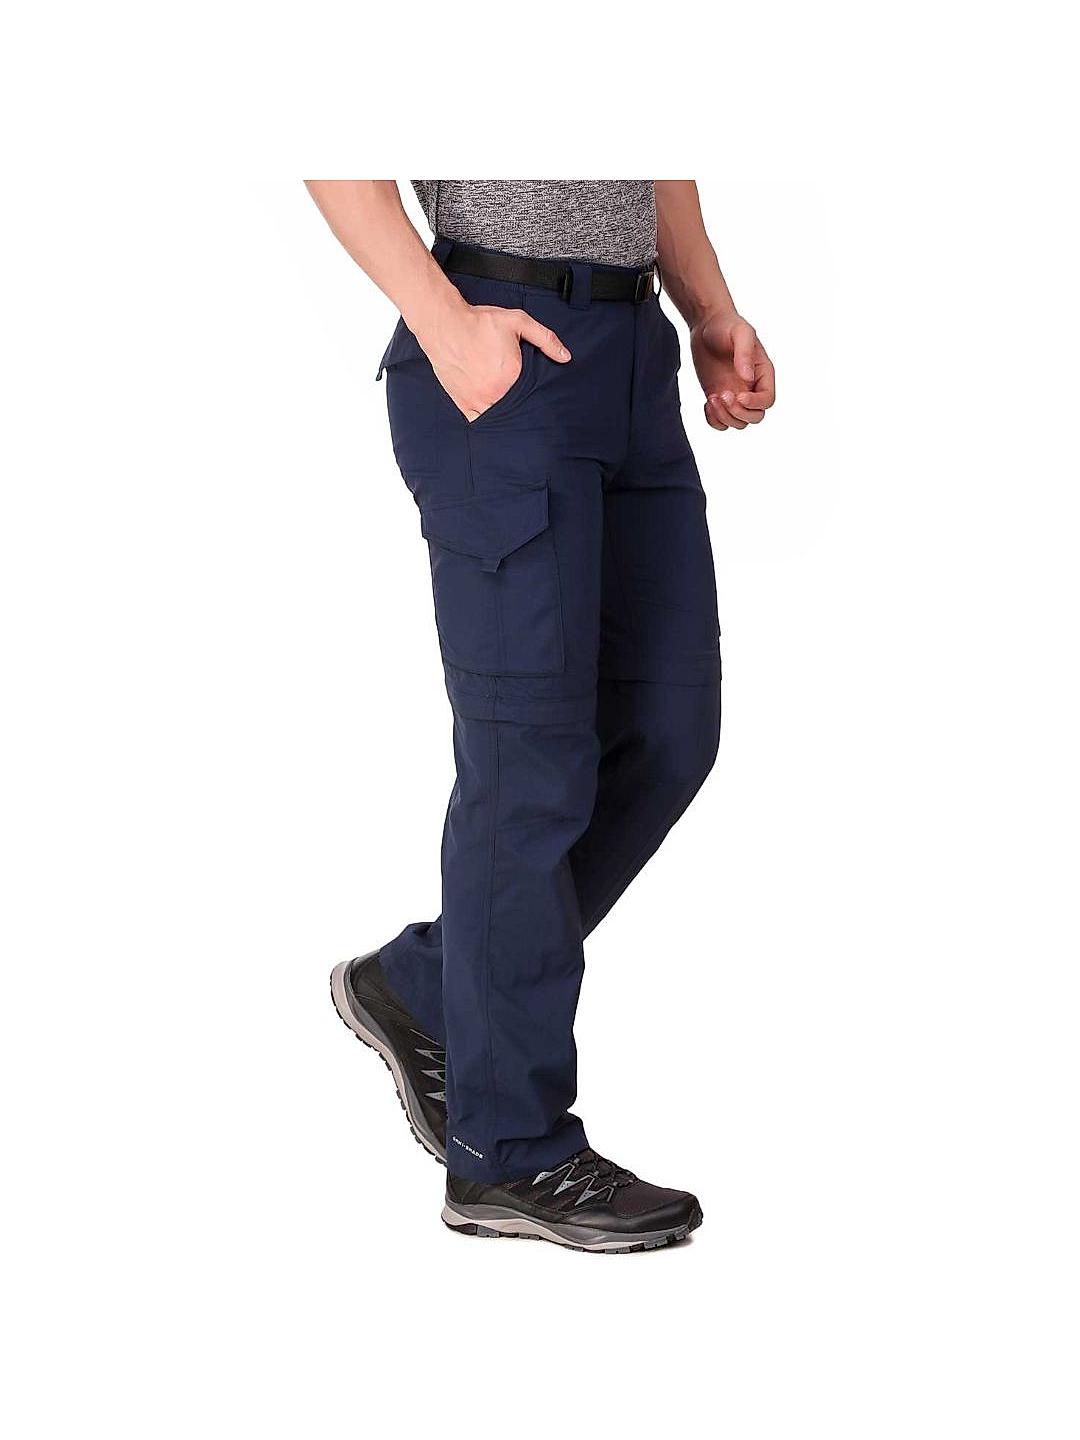 Expert Kiwi tailored convertible trousers - KS Teamwear